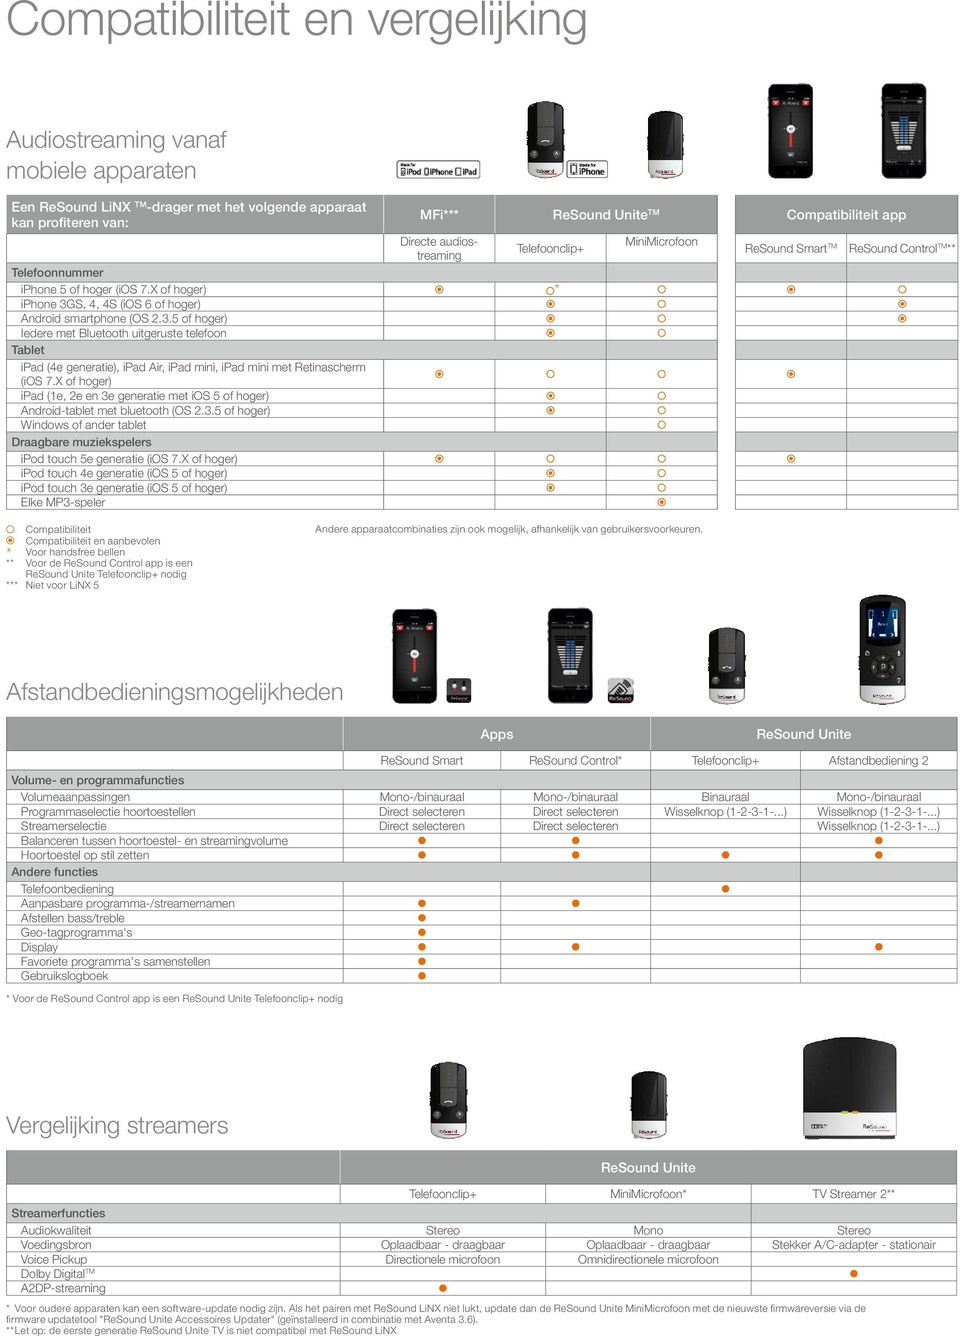 S, 4, 4S (ios 6 of hoger) Android smartphone (OS 2.3.5 of hoger) Iedere met Bluetooth uitgeruste telefoon Tablet ipad (4e generatie), ipad Air, ipad mini, ipad mini met Retinascherm (ios 7.